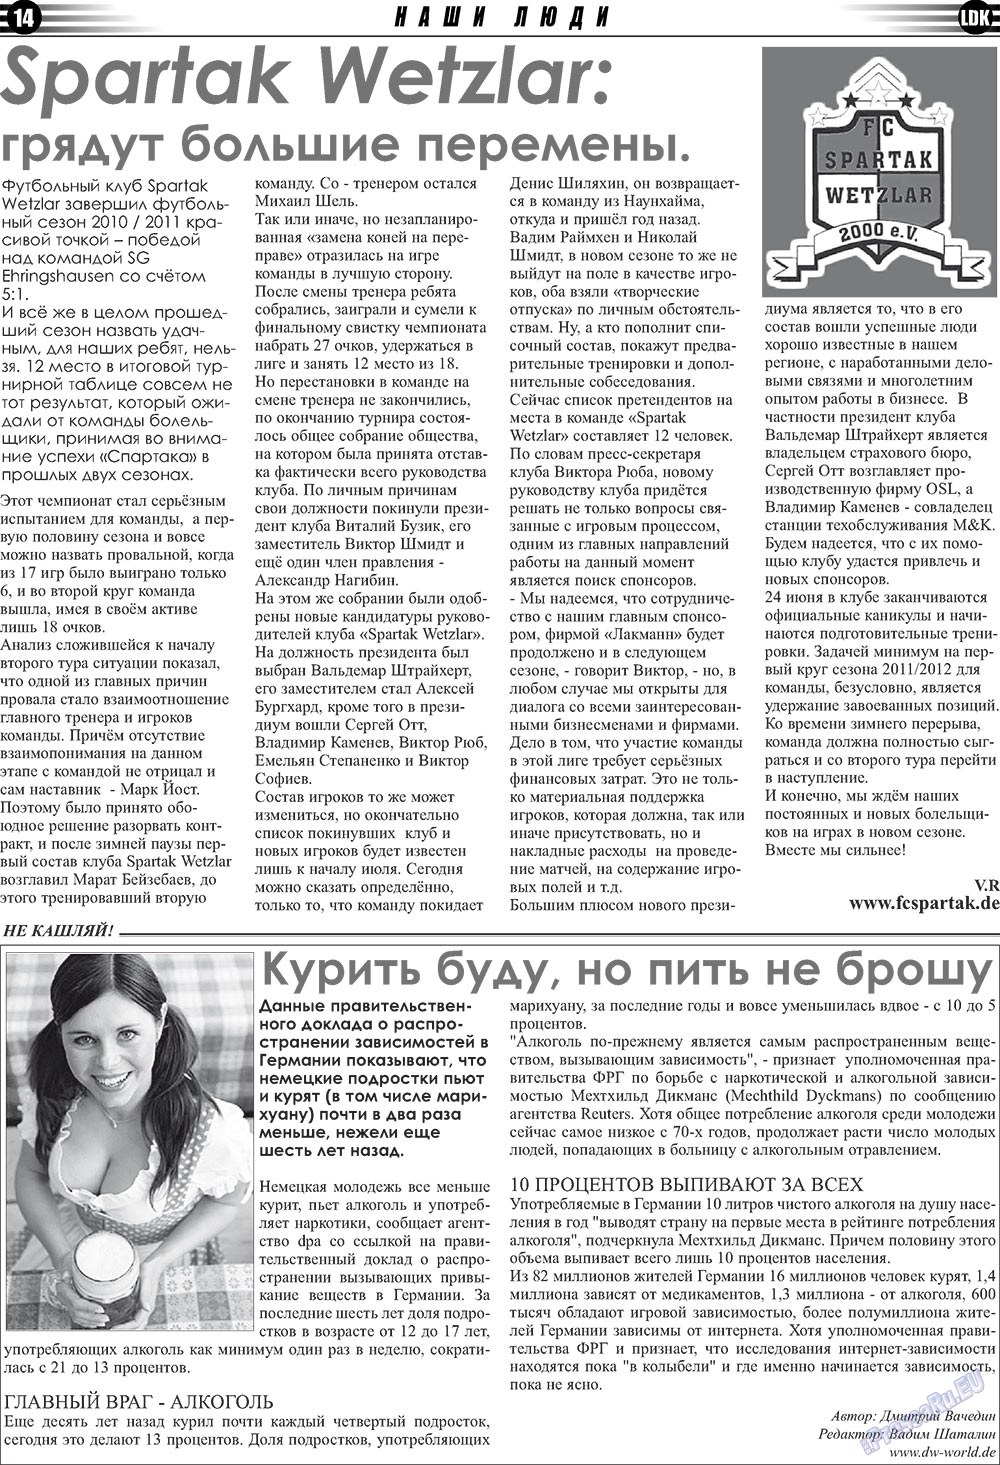 LDK по-русски, газета. 2011 №4 стр.14